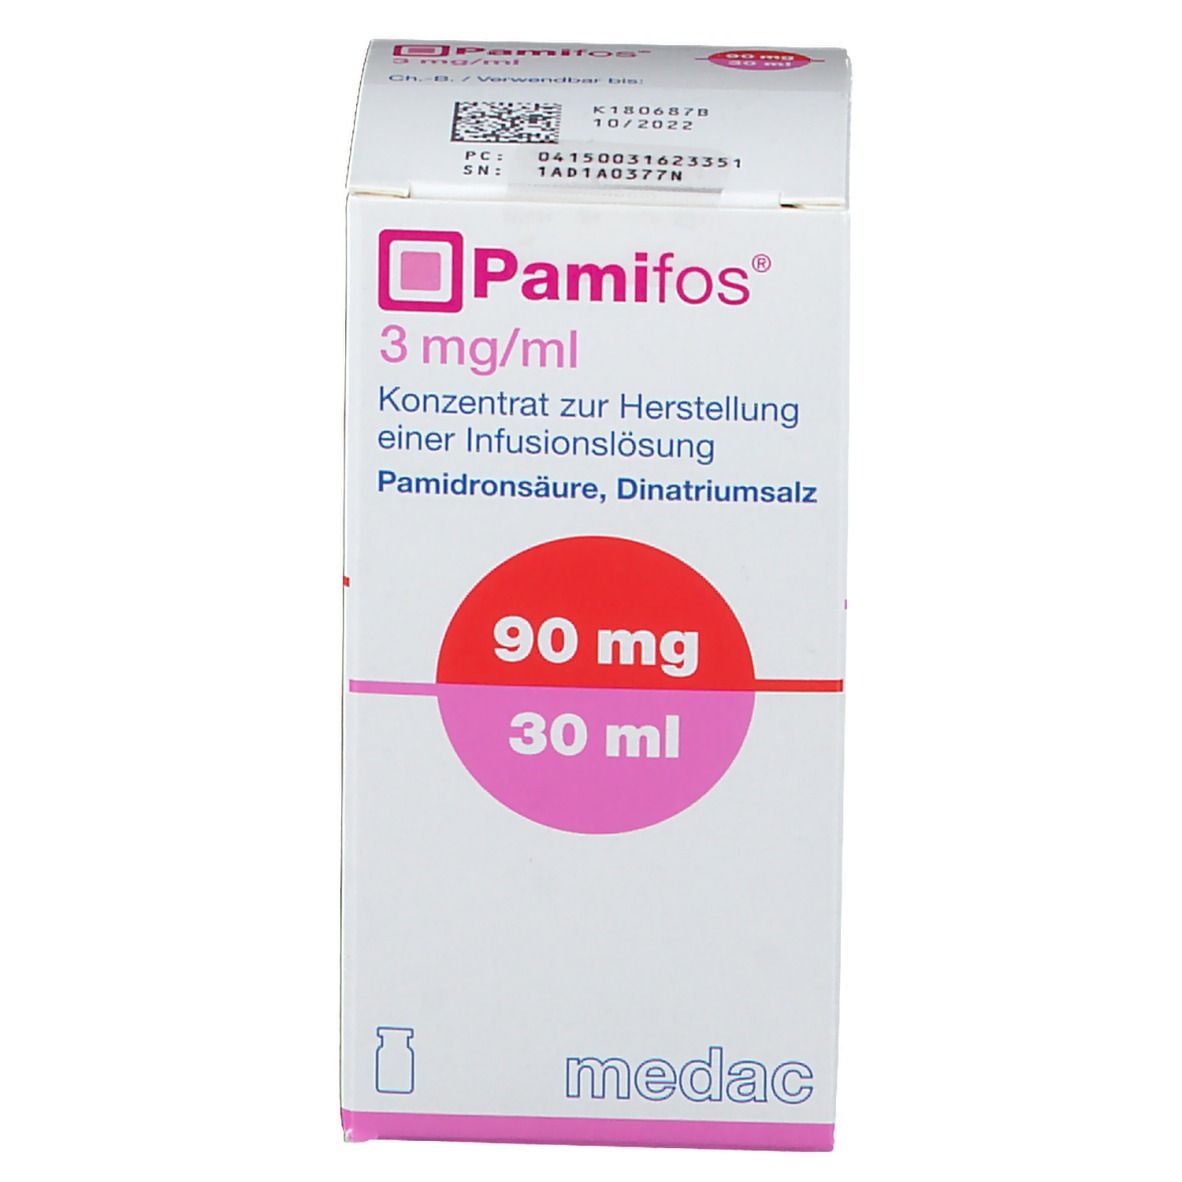 Pamifos® 3 mg/ml